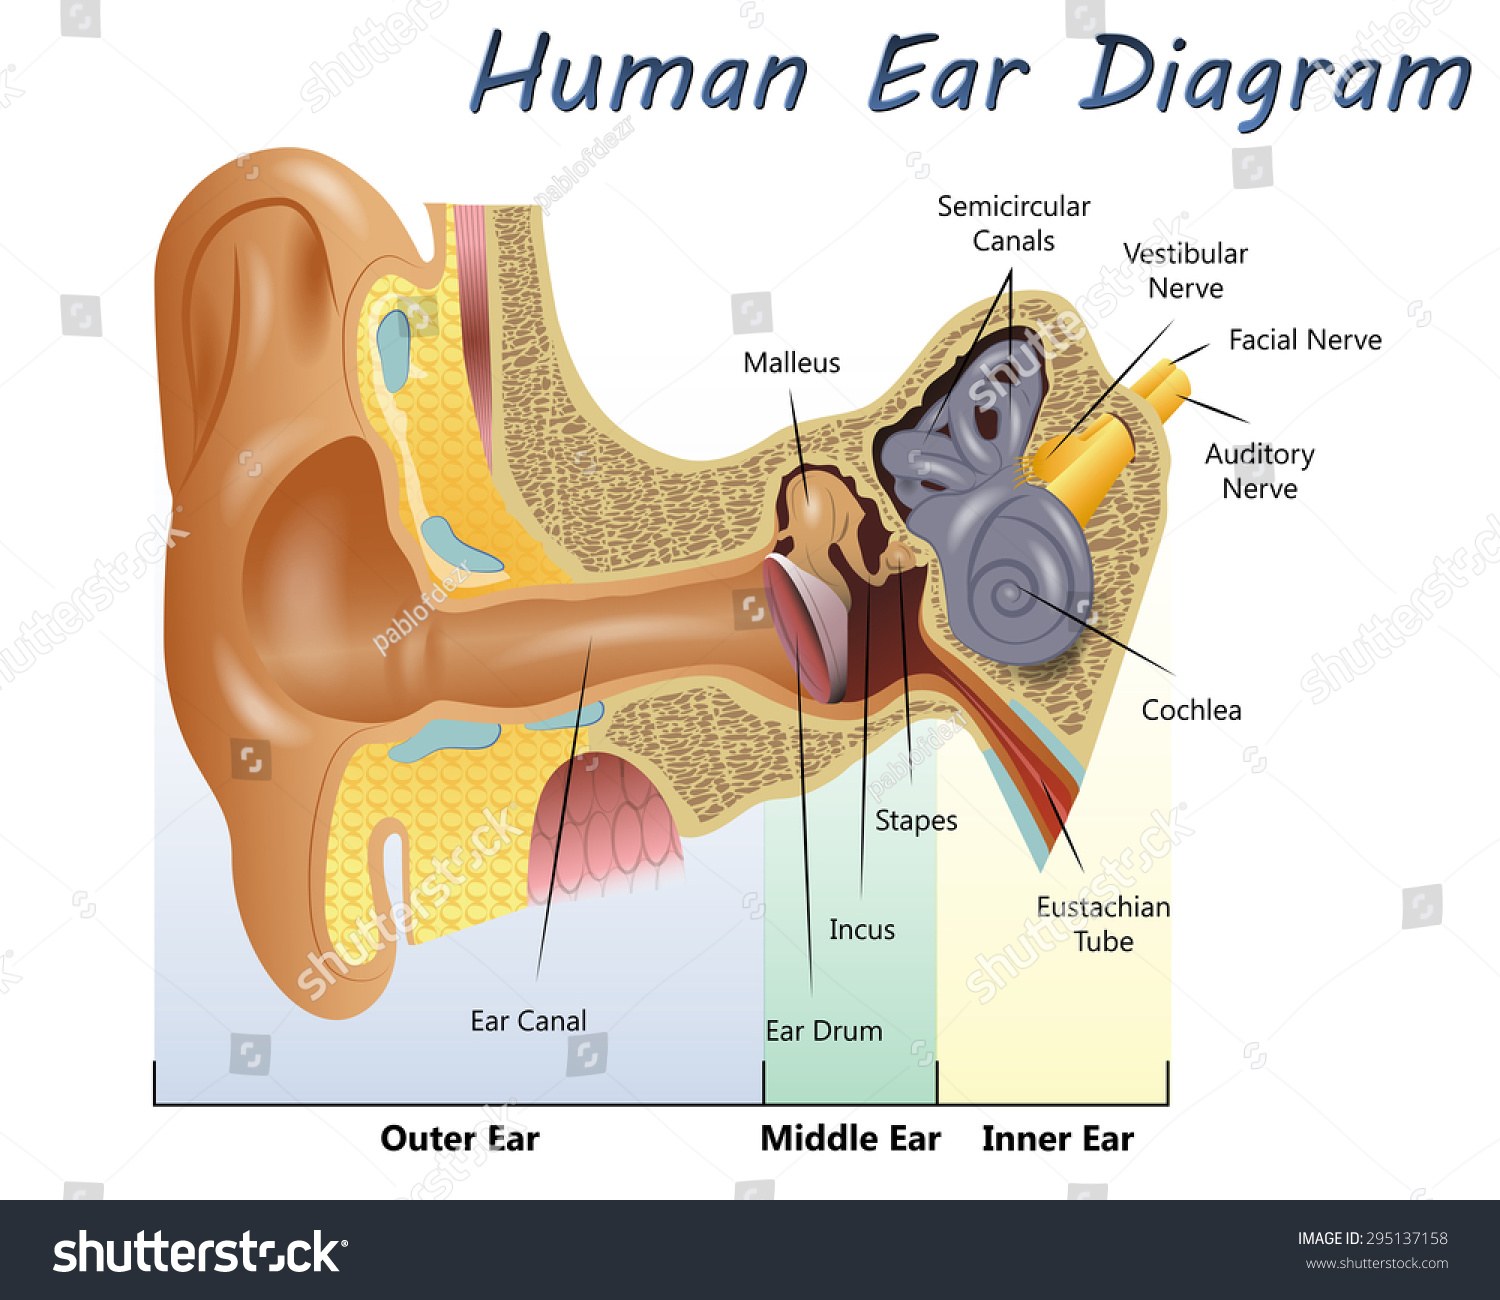 Human Ear Diagram Stock Vector 295137158 : Shutterstock